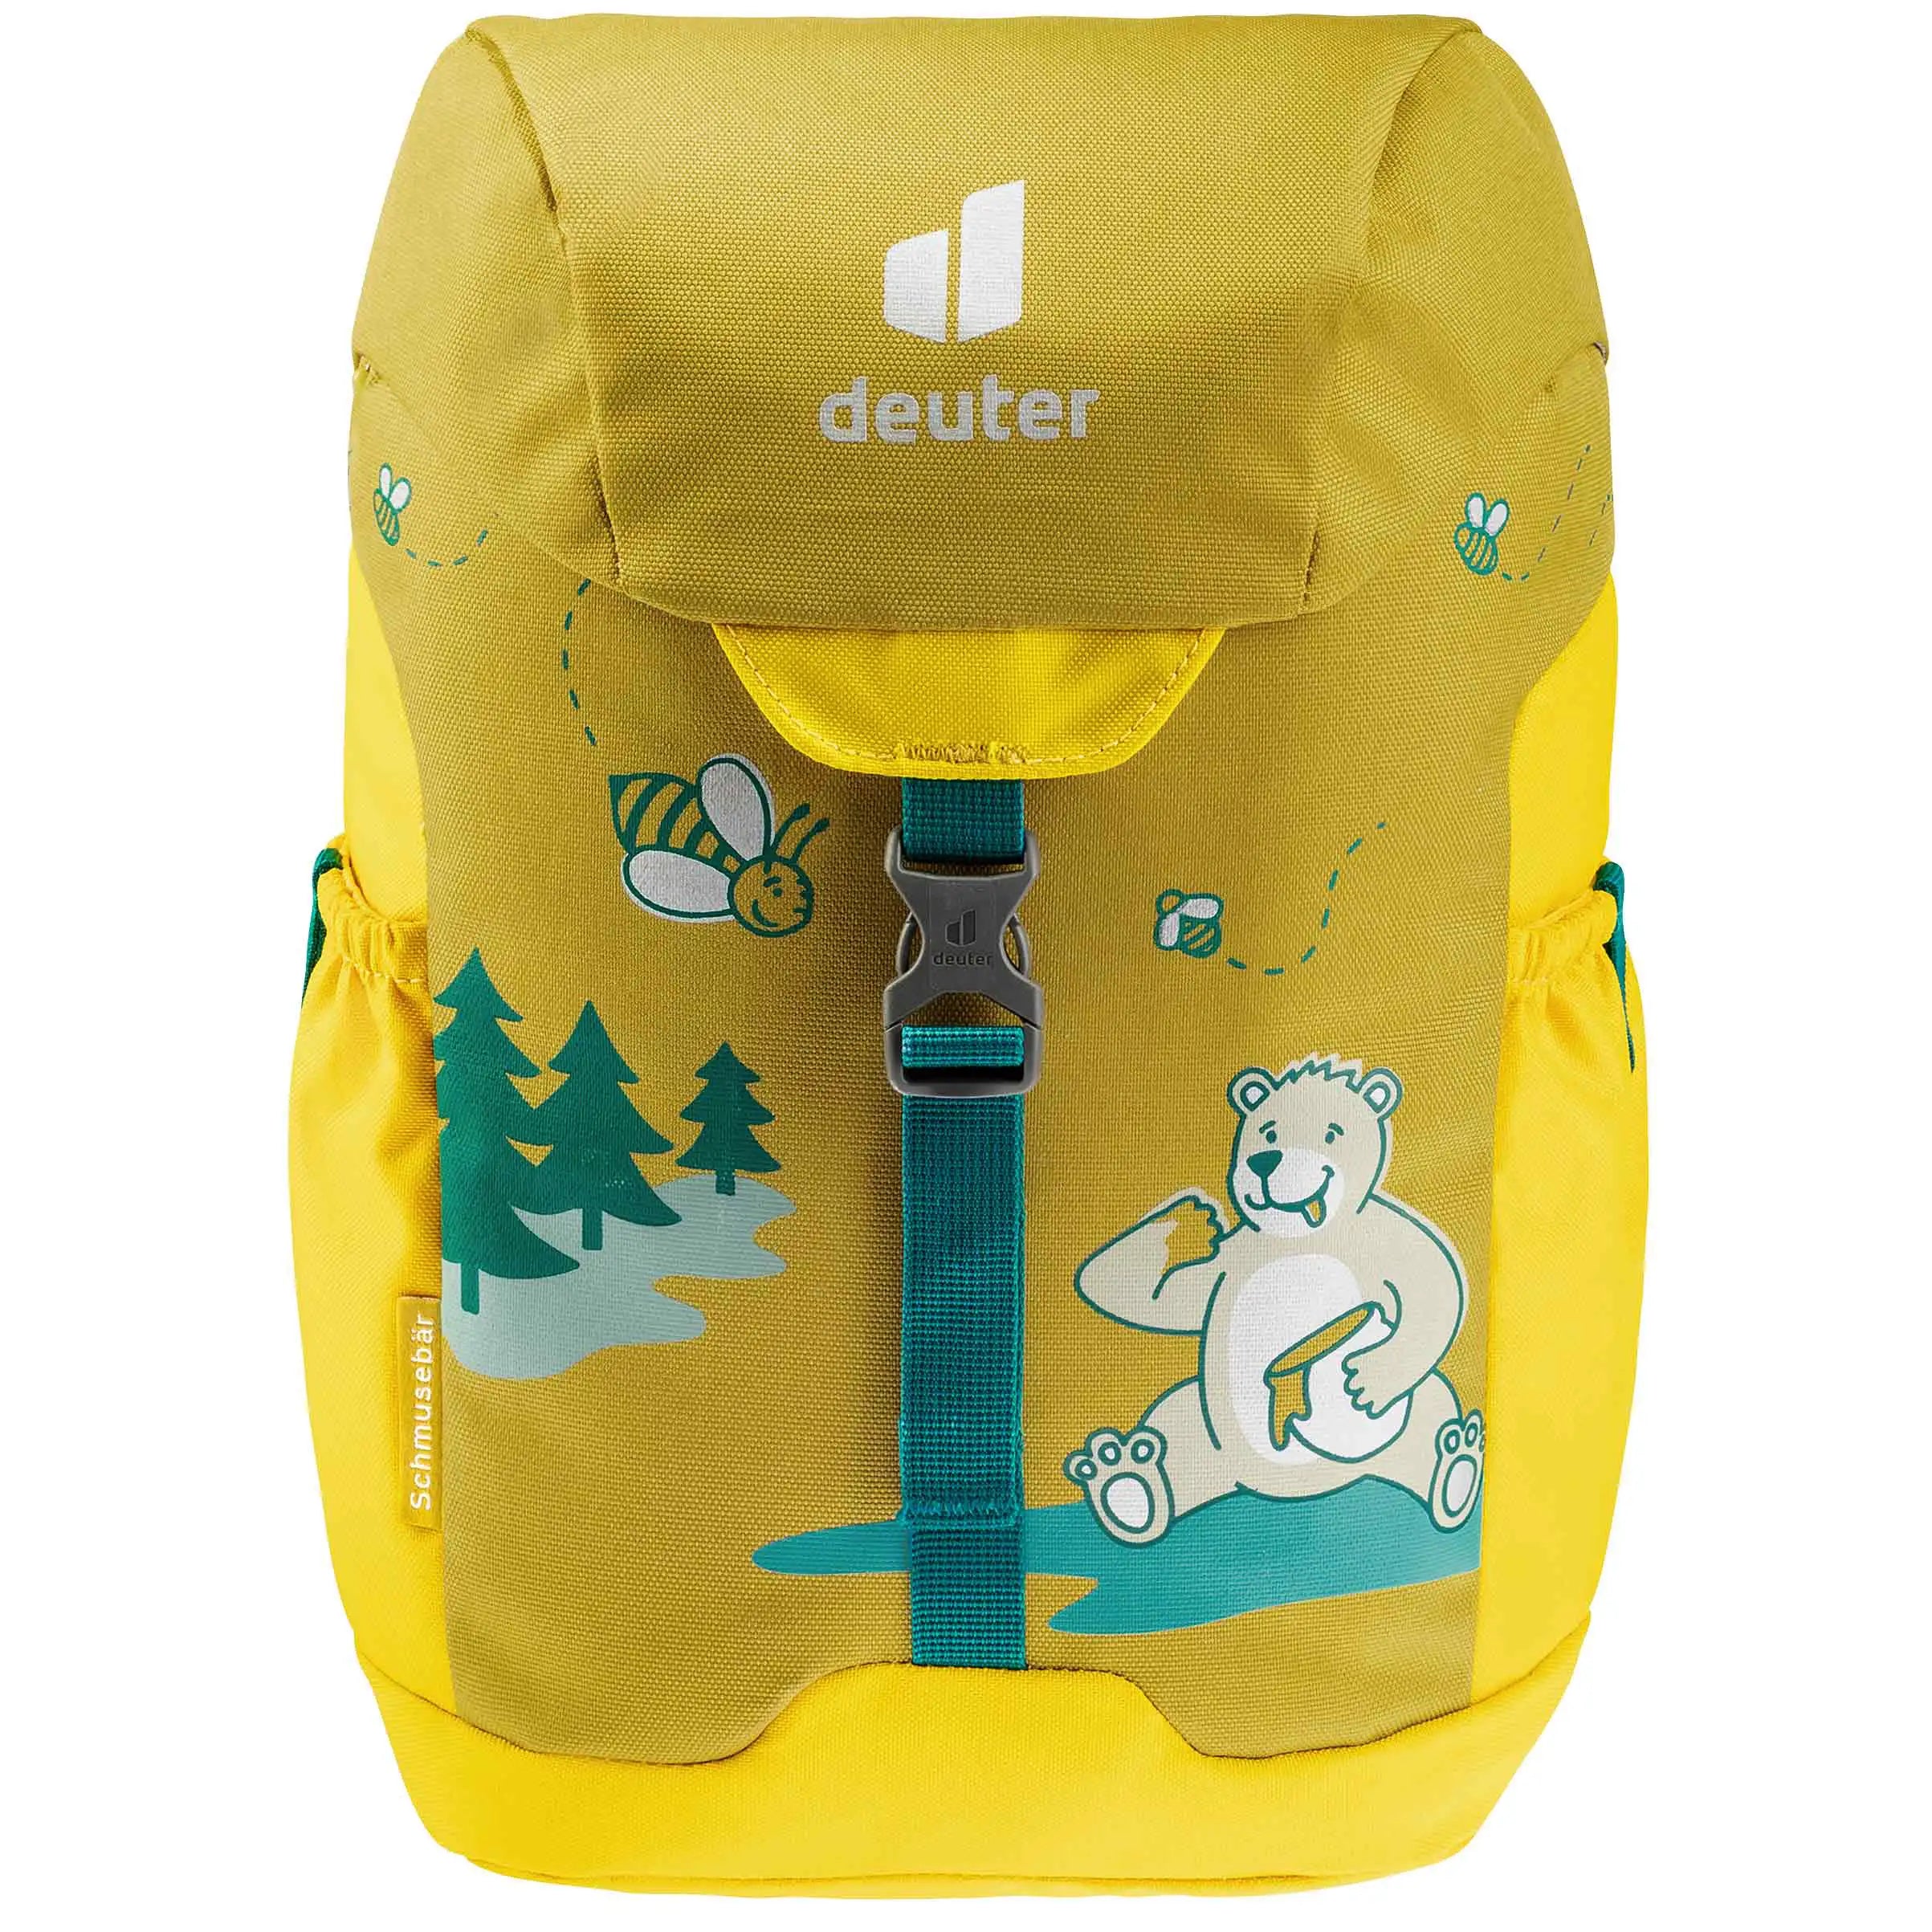 Deuter Daypack Schmusebär children's backpack 33 cm - Turmeric-Corn